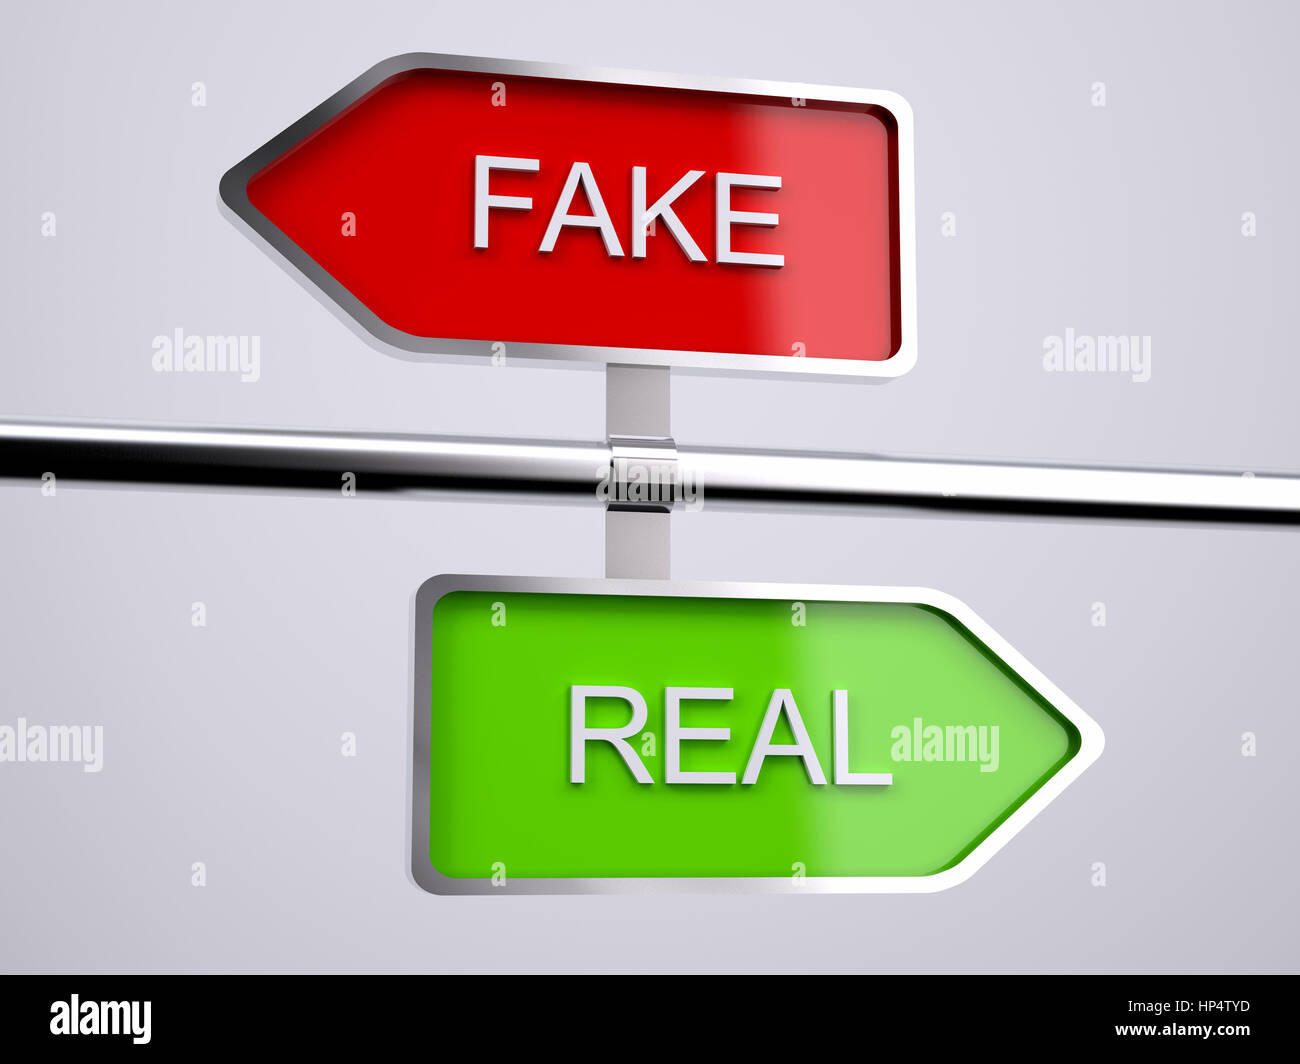 Real Vs Fake Three 3 Way Street Signs 3d Illustration Stock Photo